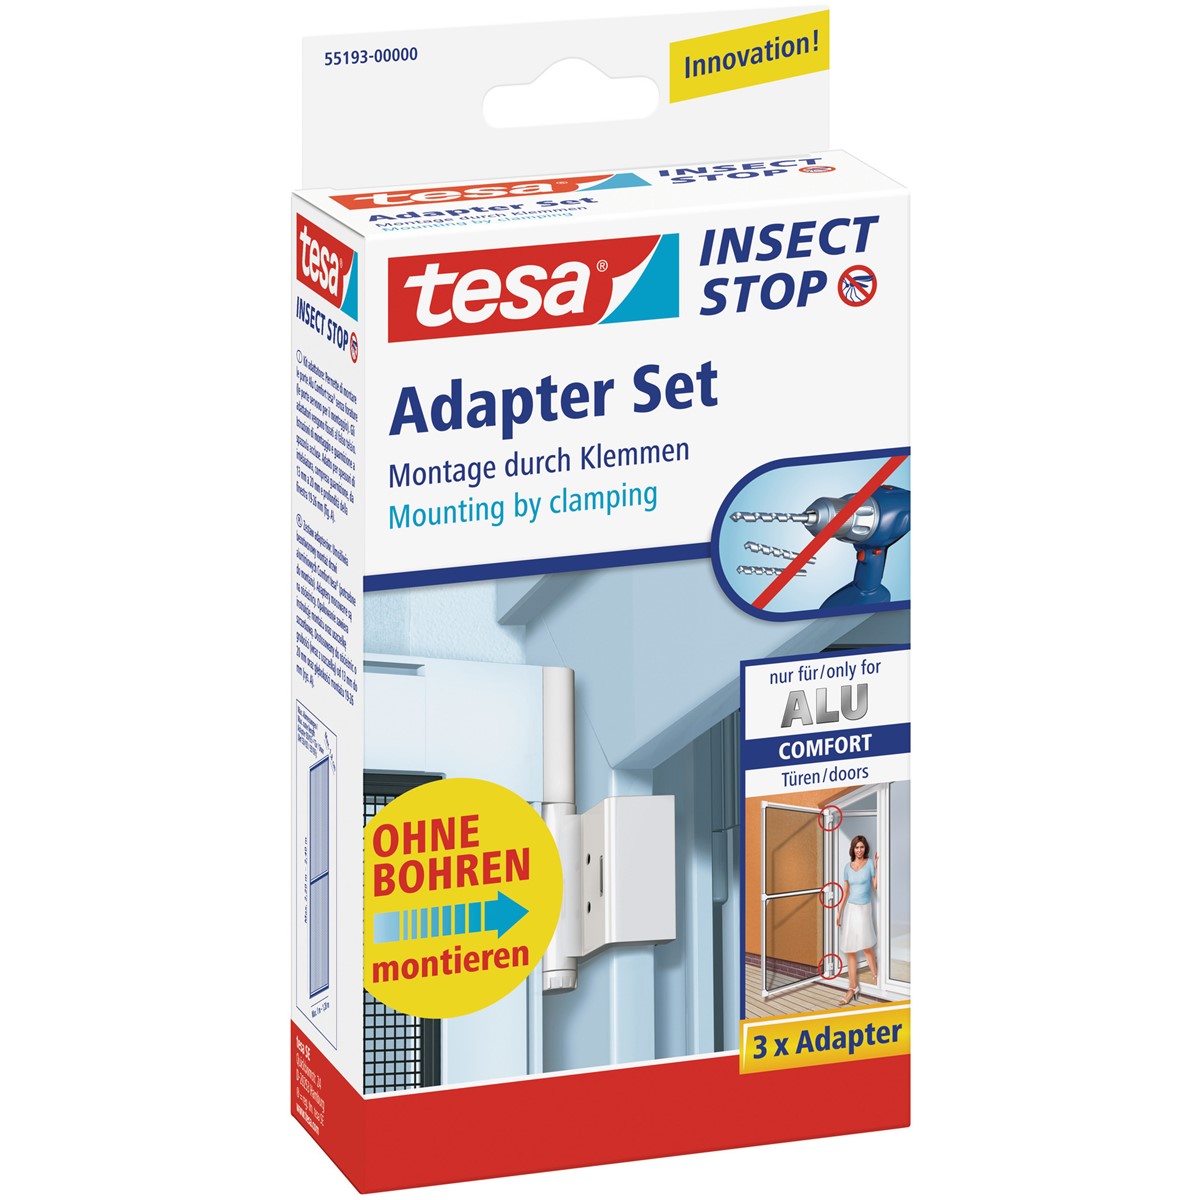 Adapter Tür, ALU COMFORT Insect weiß Stop 55193-00000 tesa für -